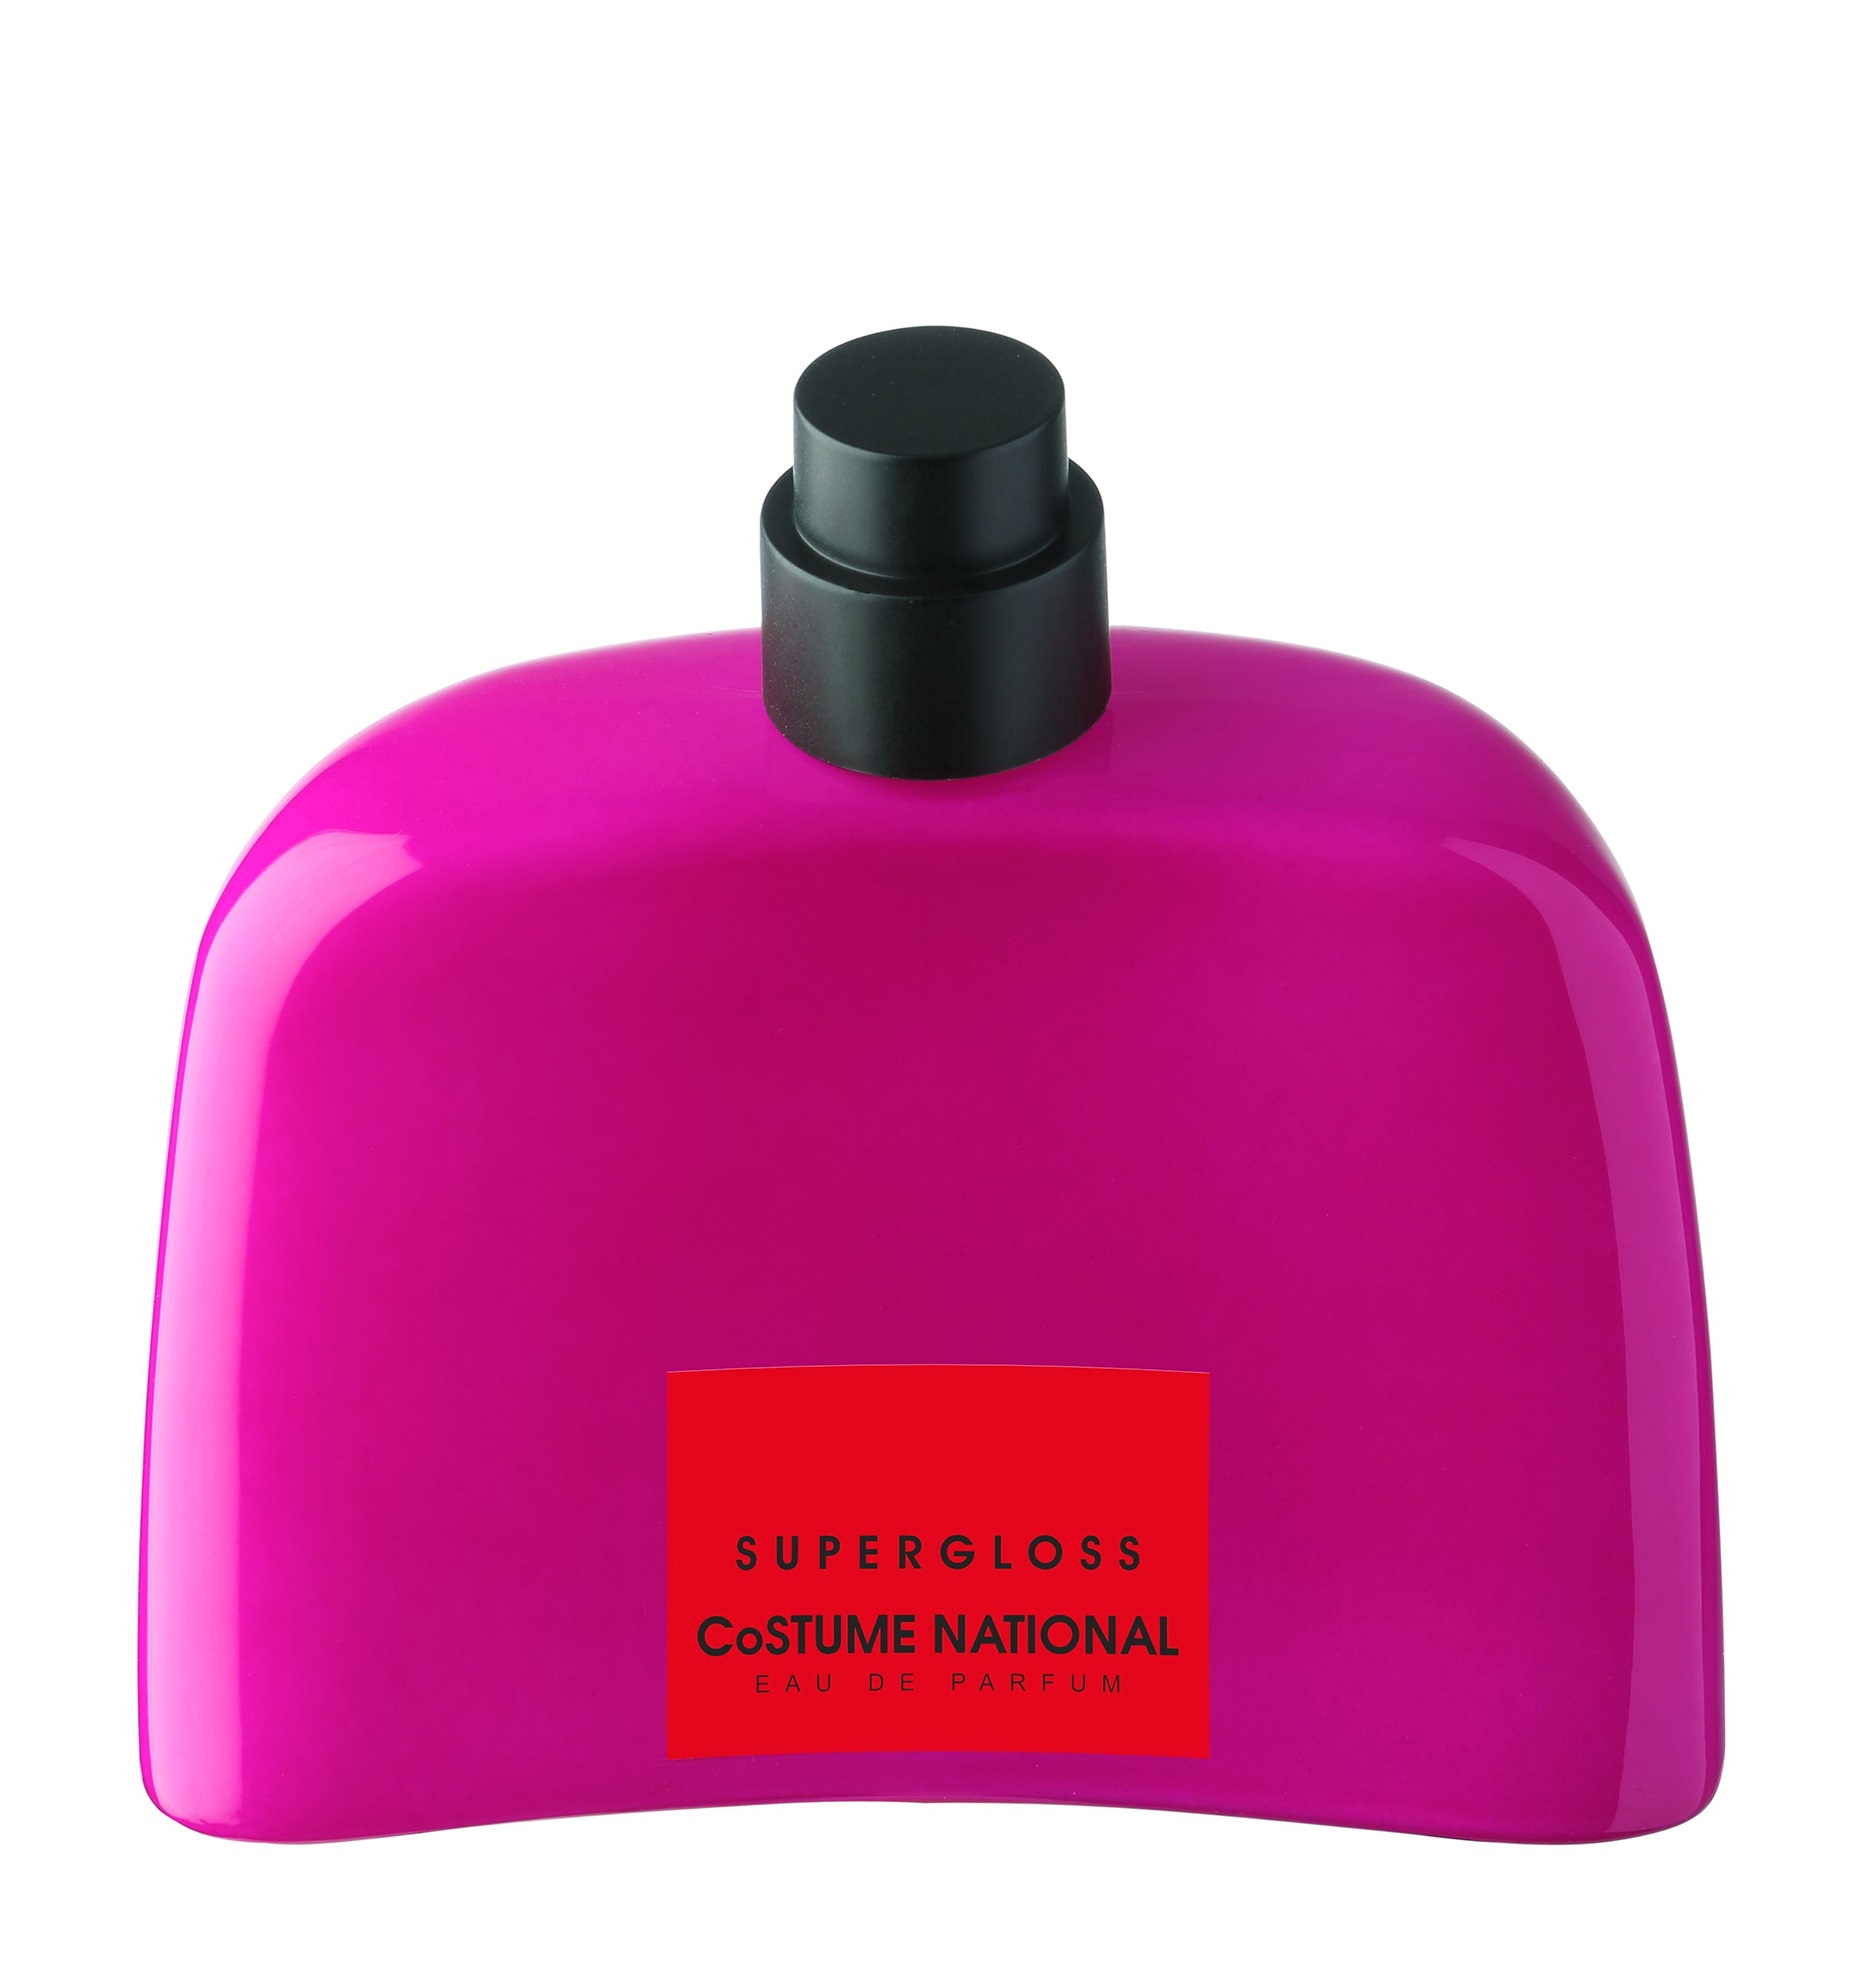 Парфюмерная вода CoSTUME NATIONAL Supergloss женская, 50 мл парфюм costume national intense red edition parfum